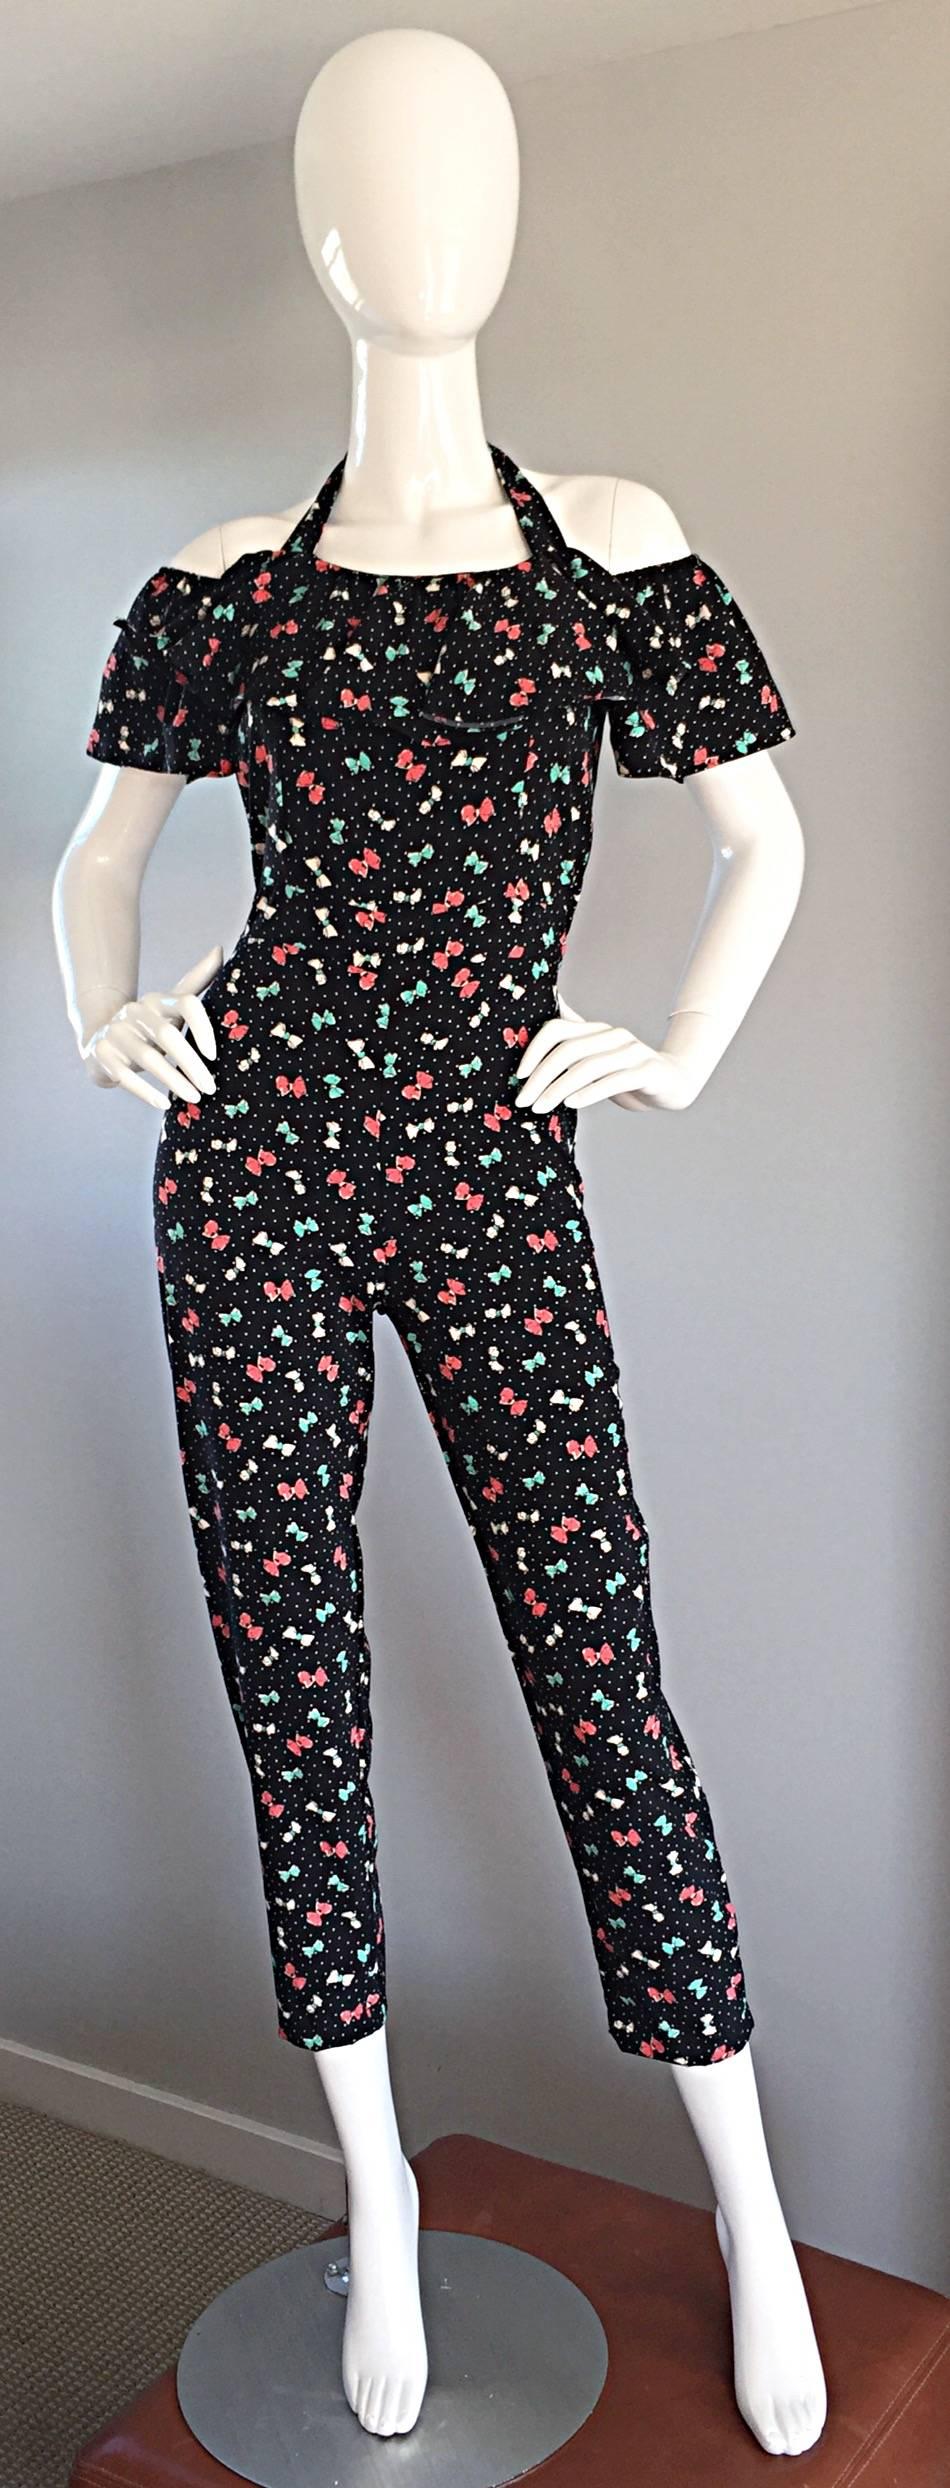 Women's Amazing Vintage Novelty Ruffle Jumpsuit Romper Onesie w/ Bows + Polka Dot Prints